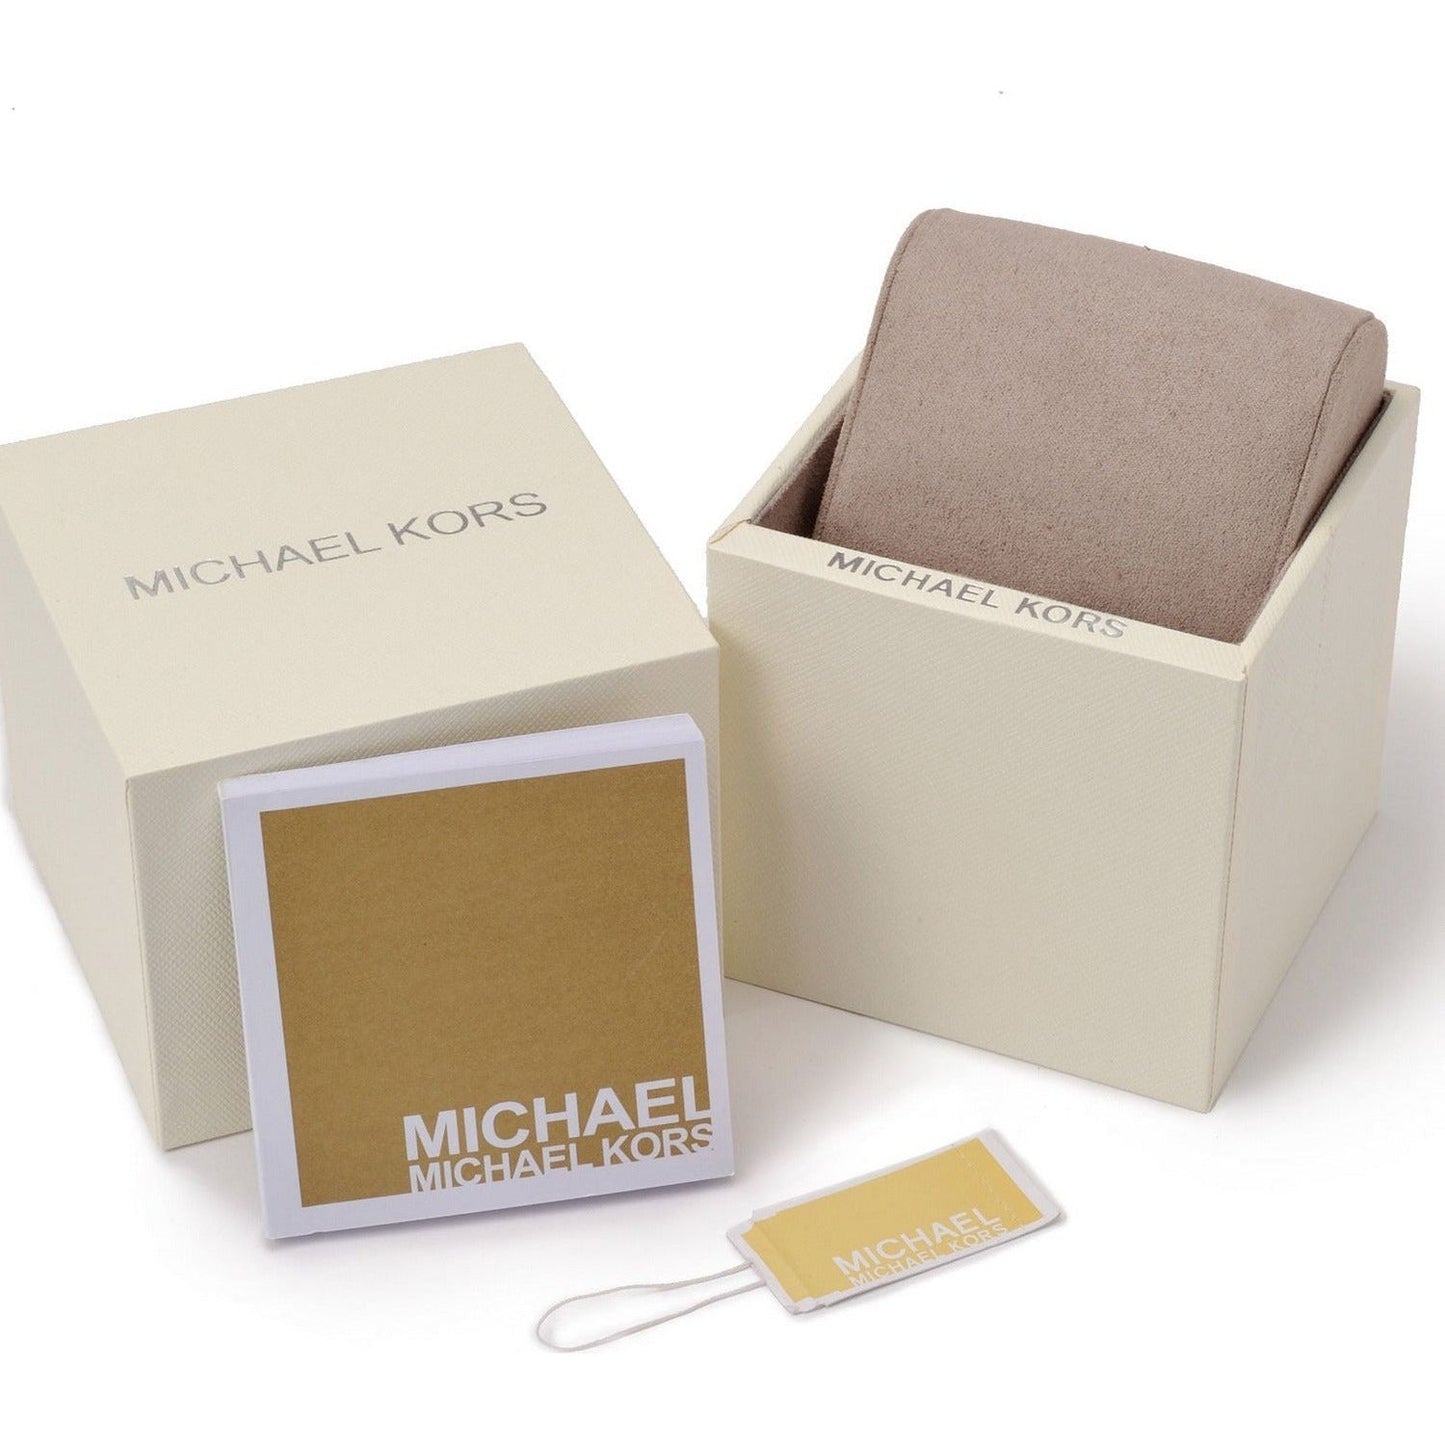 MICHAEL KORS MICHAEL KORS Mod. MK8817 WATCHES michael-kors-mod-mk8817